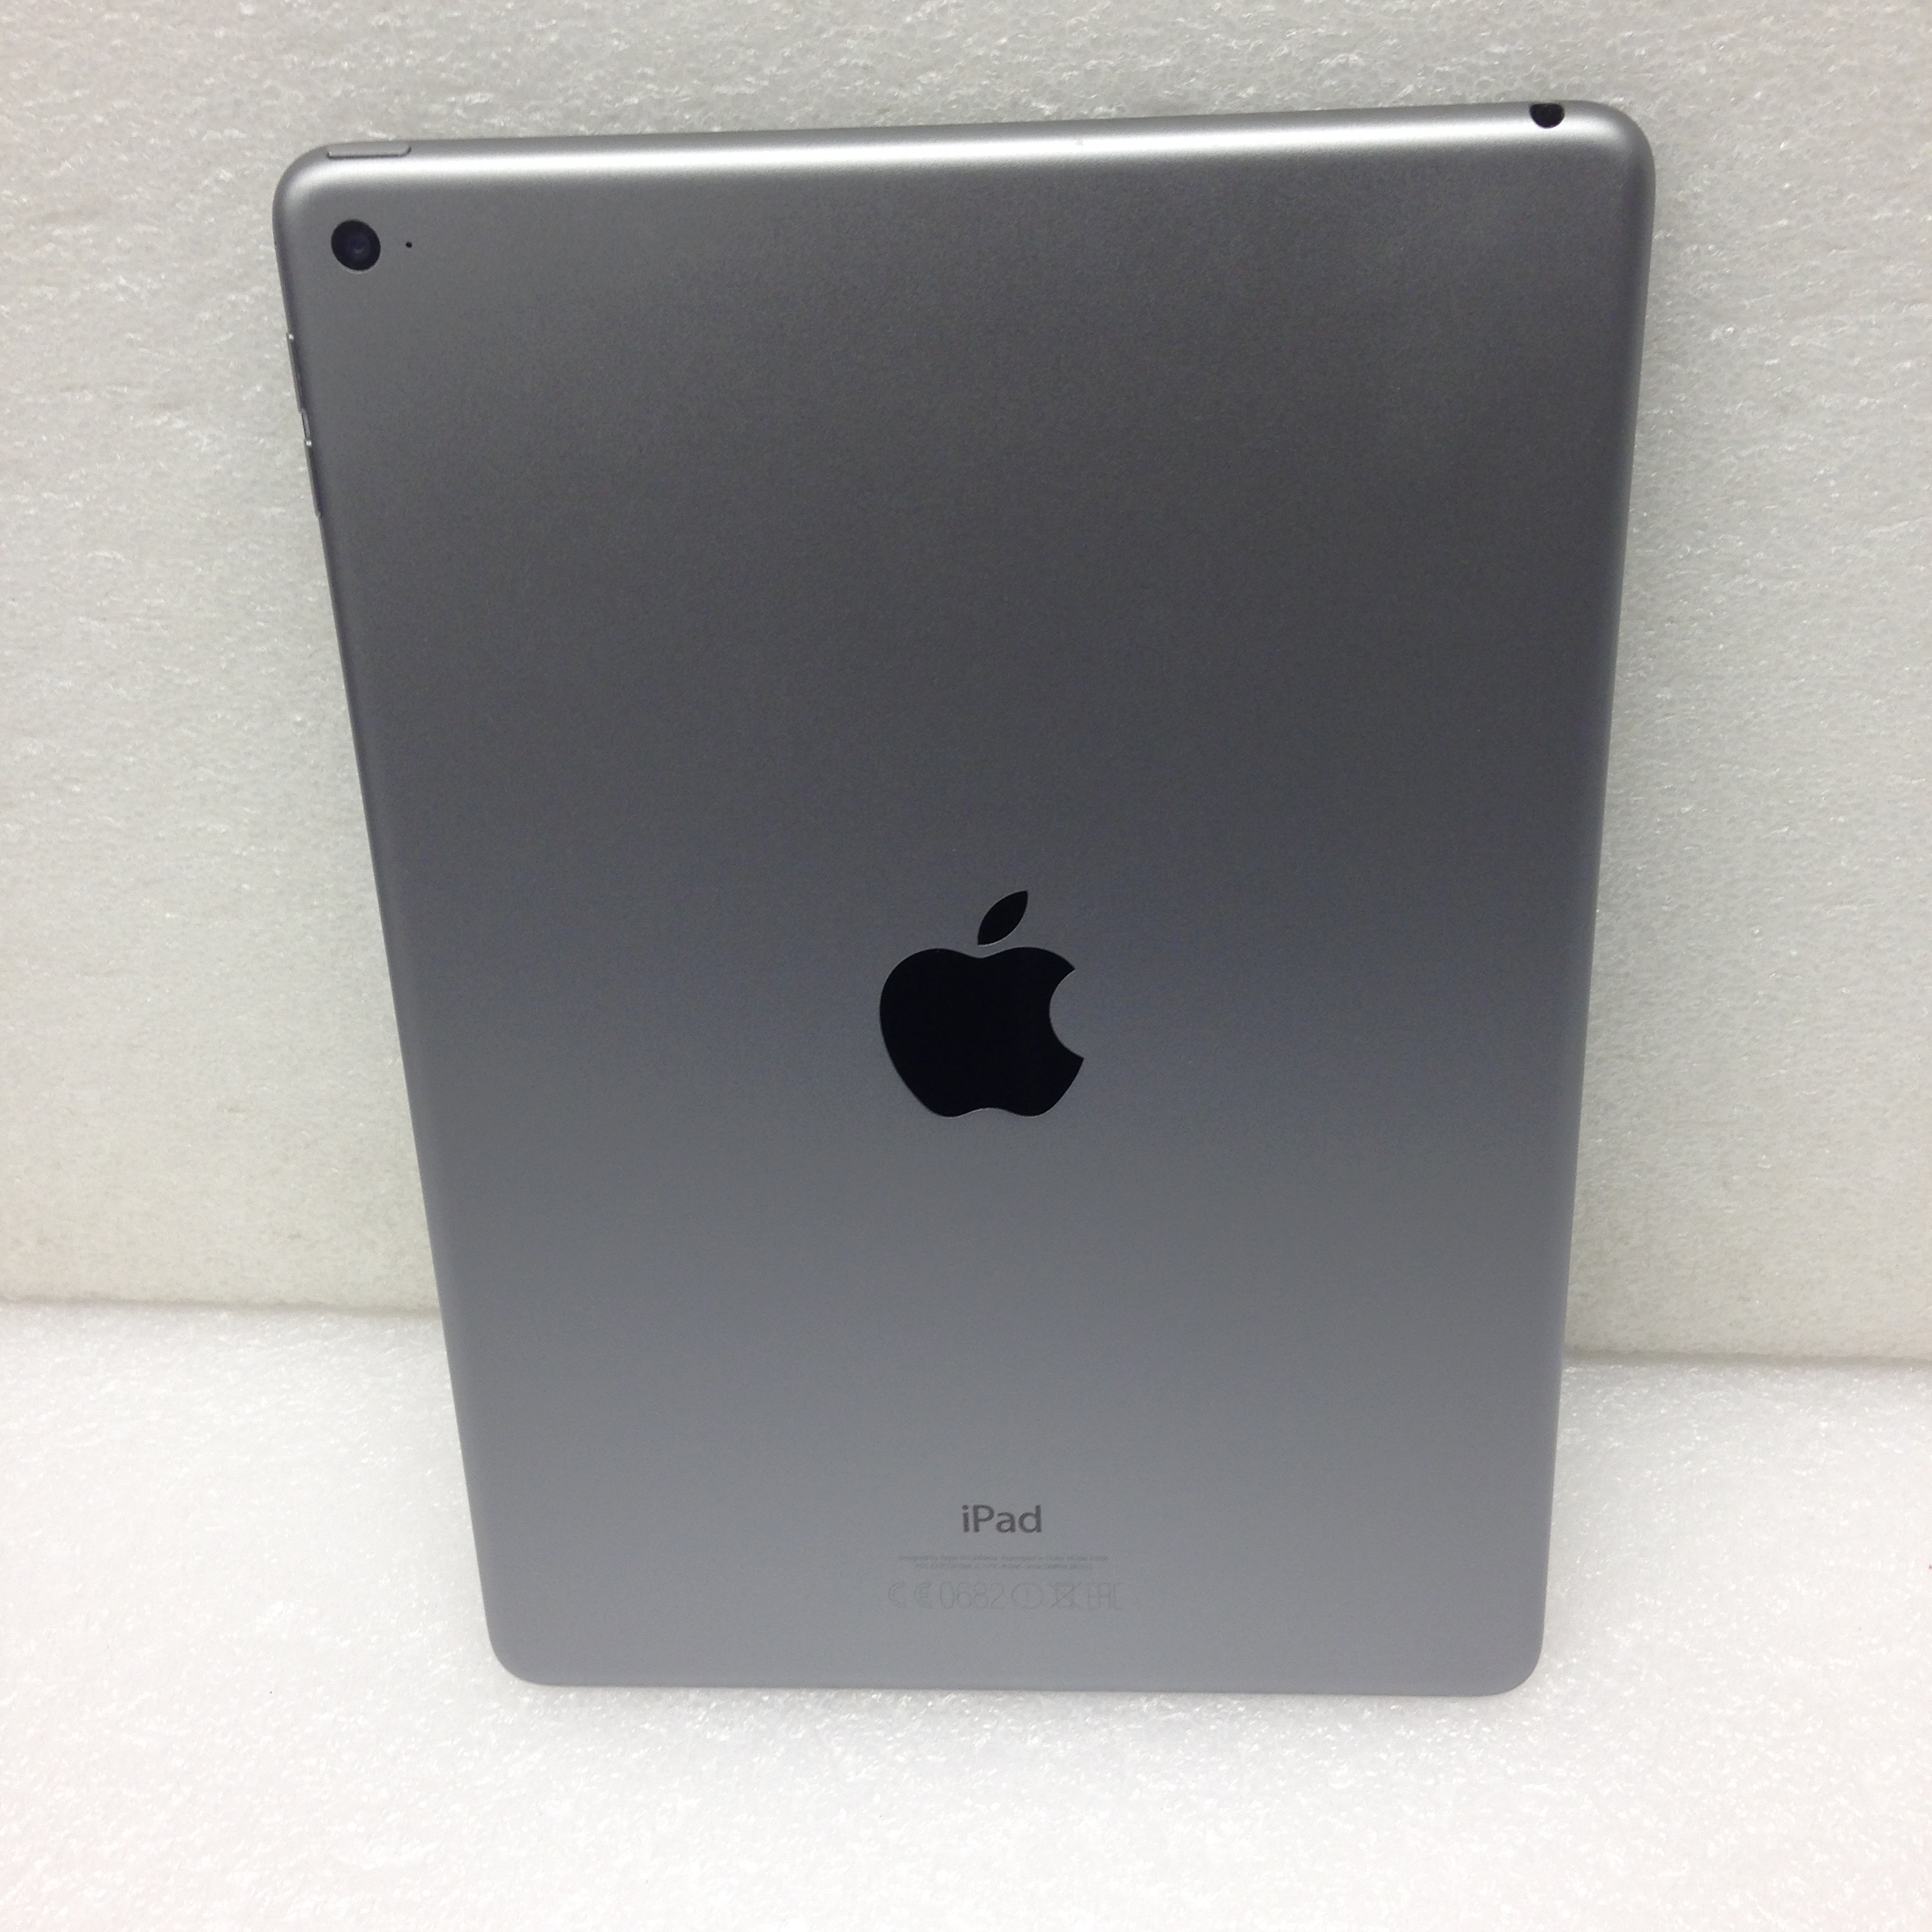 iPad mini 4 Wi-Fi + Cellular con garantía Apple hasta el 04.11.2016 64